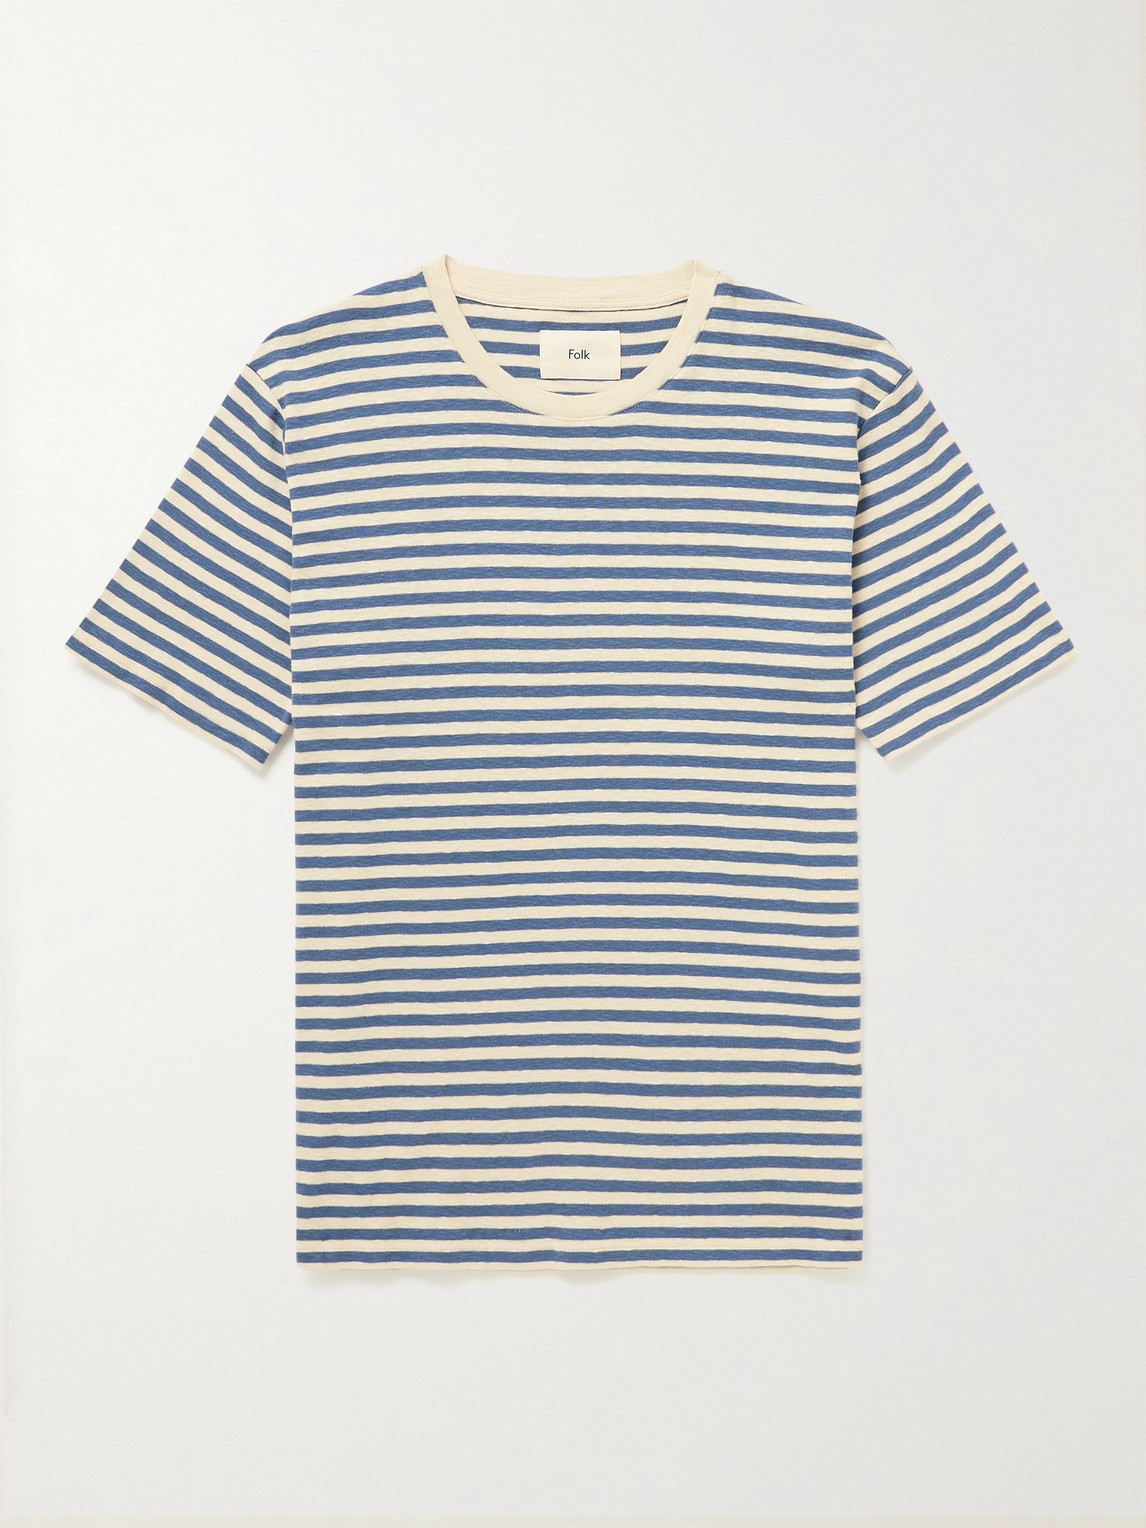 Folk Contrast Striped Cotton-jersey T-shirt In Blue